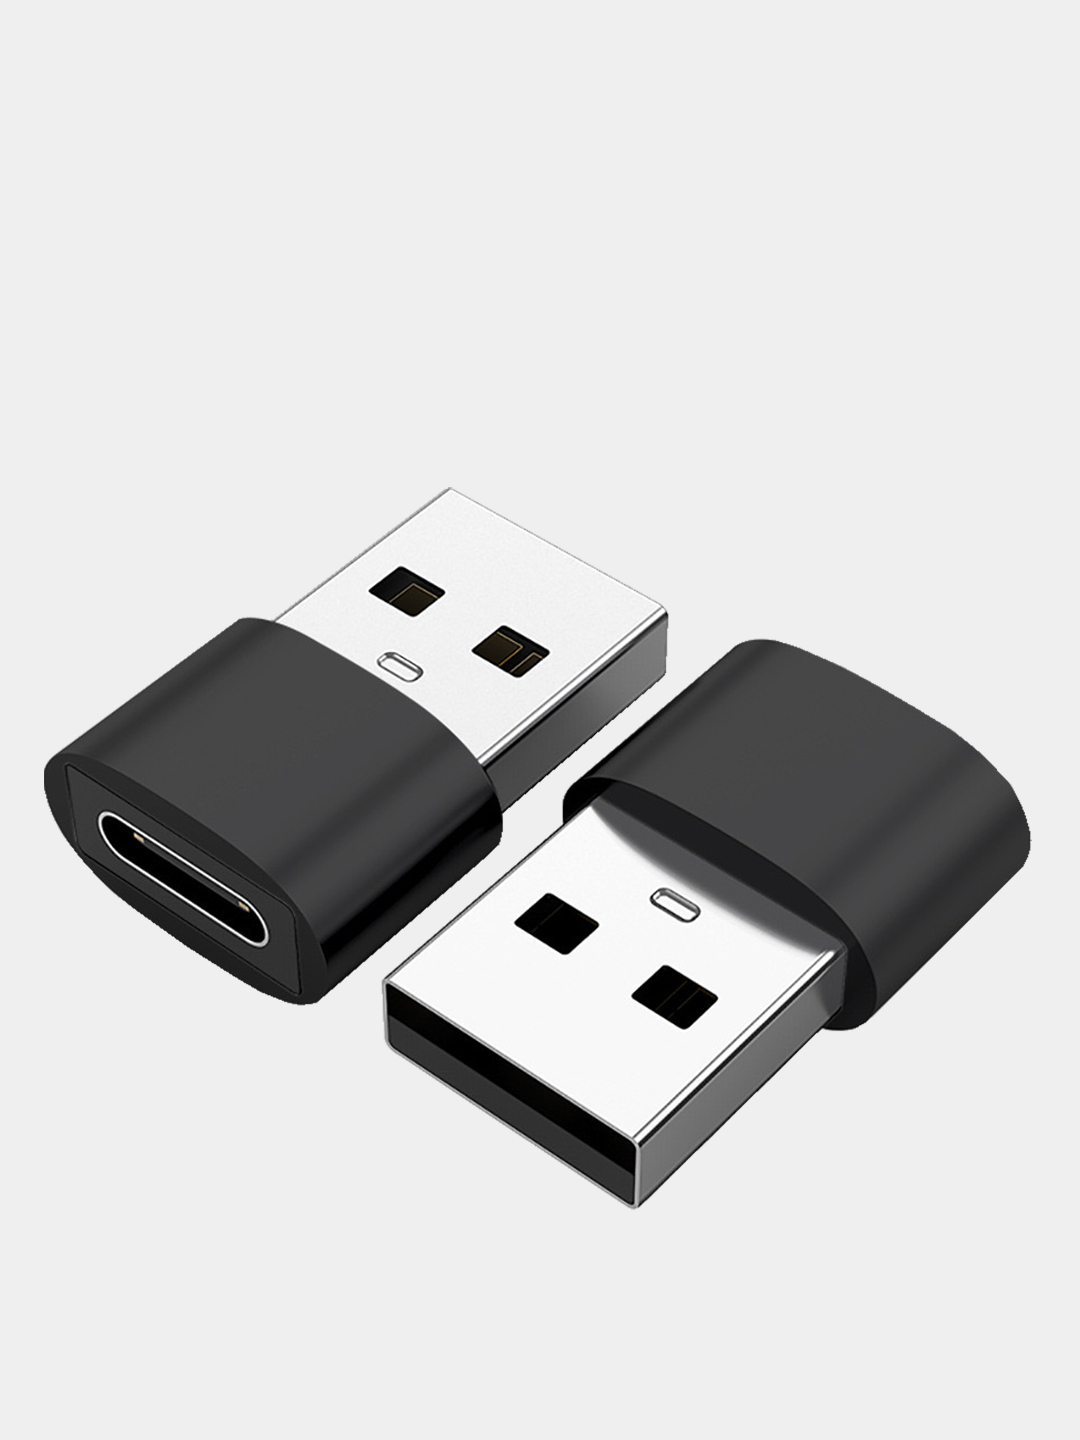 Адаптер переходник USB Type C на USB-A otg за 89 ₽  в интернет .